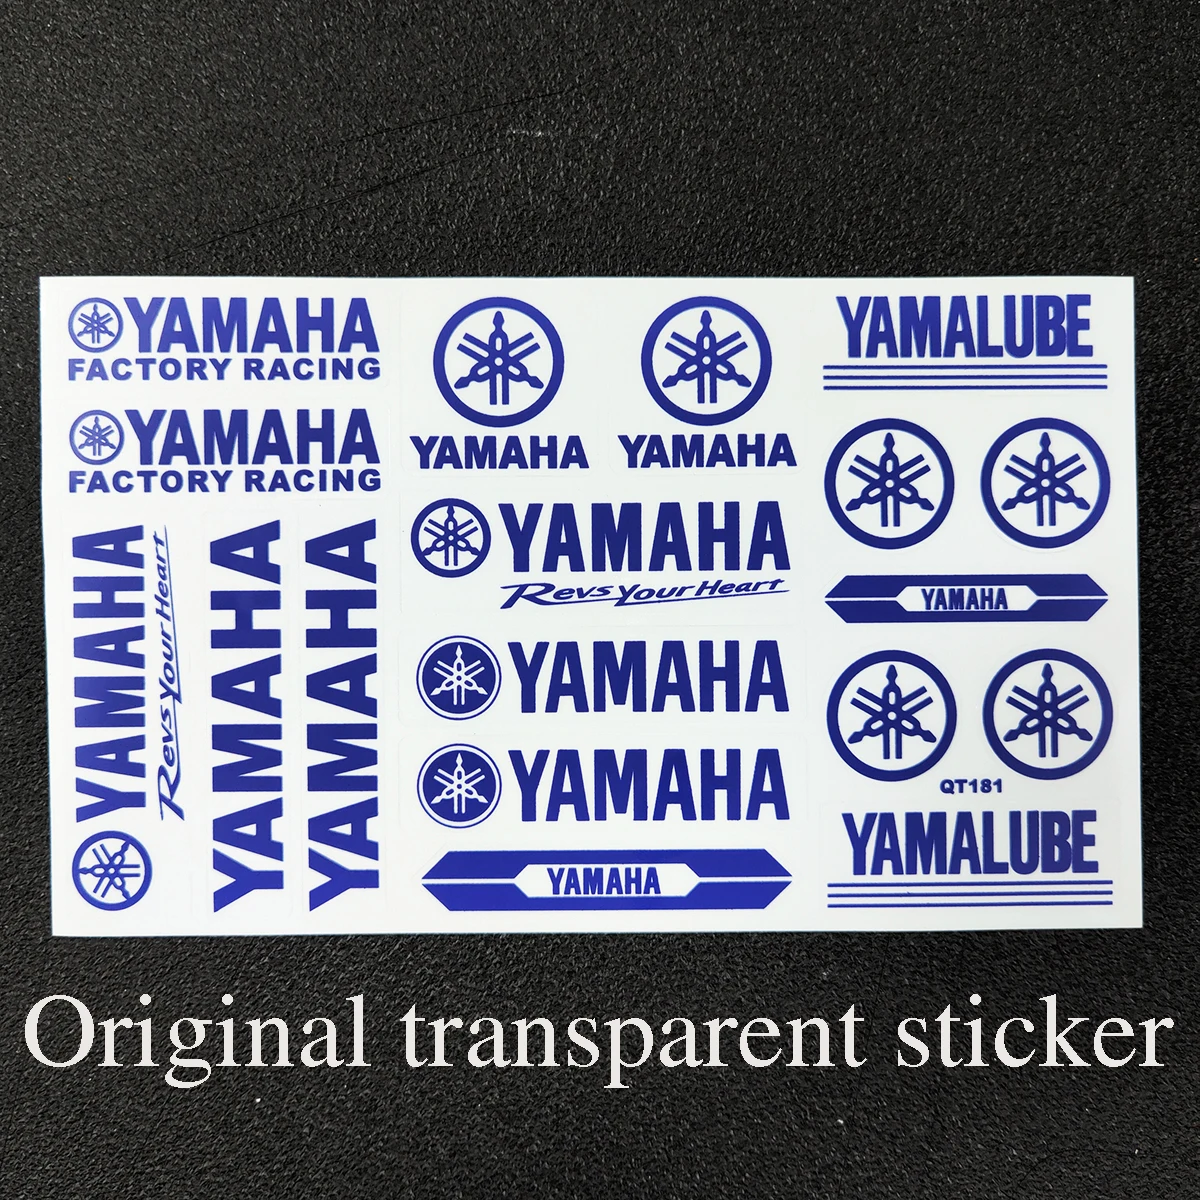 99247-00100-00 Yamaha Aufkleber Schriftzug YAMAHA